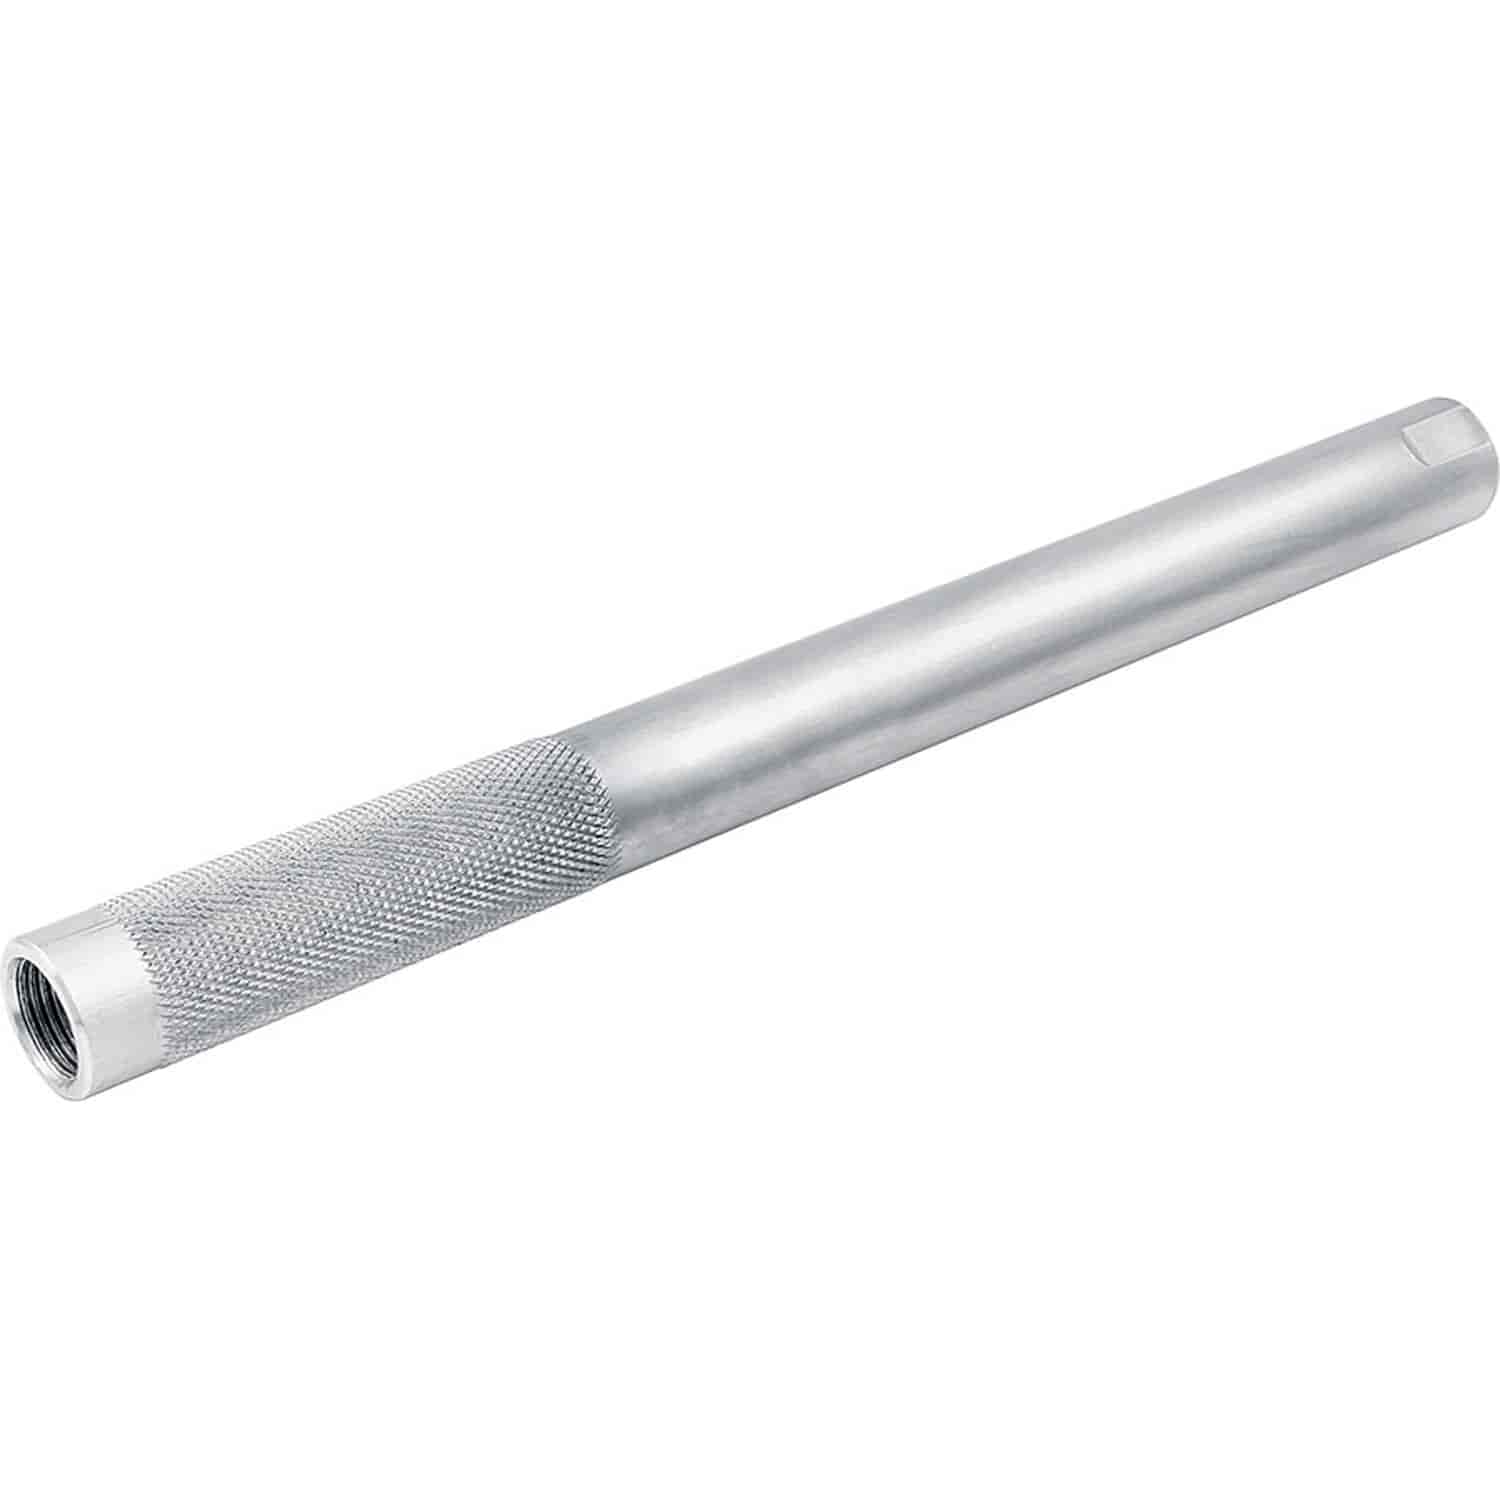 Swedged Aluminum Tie Rod Tube Length: 16